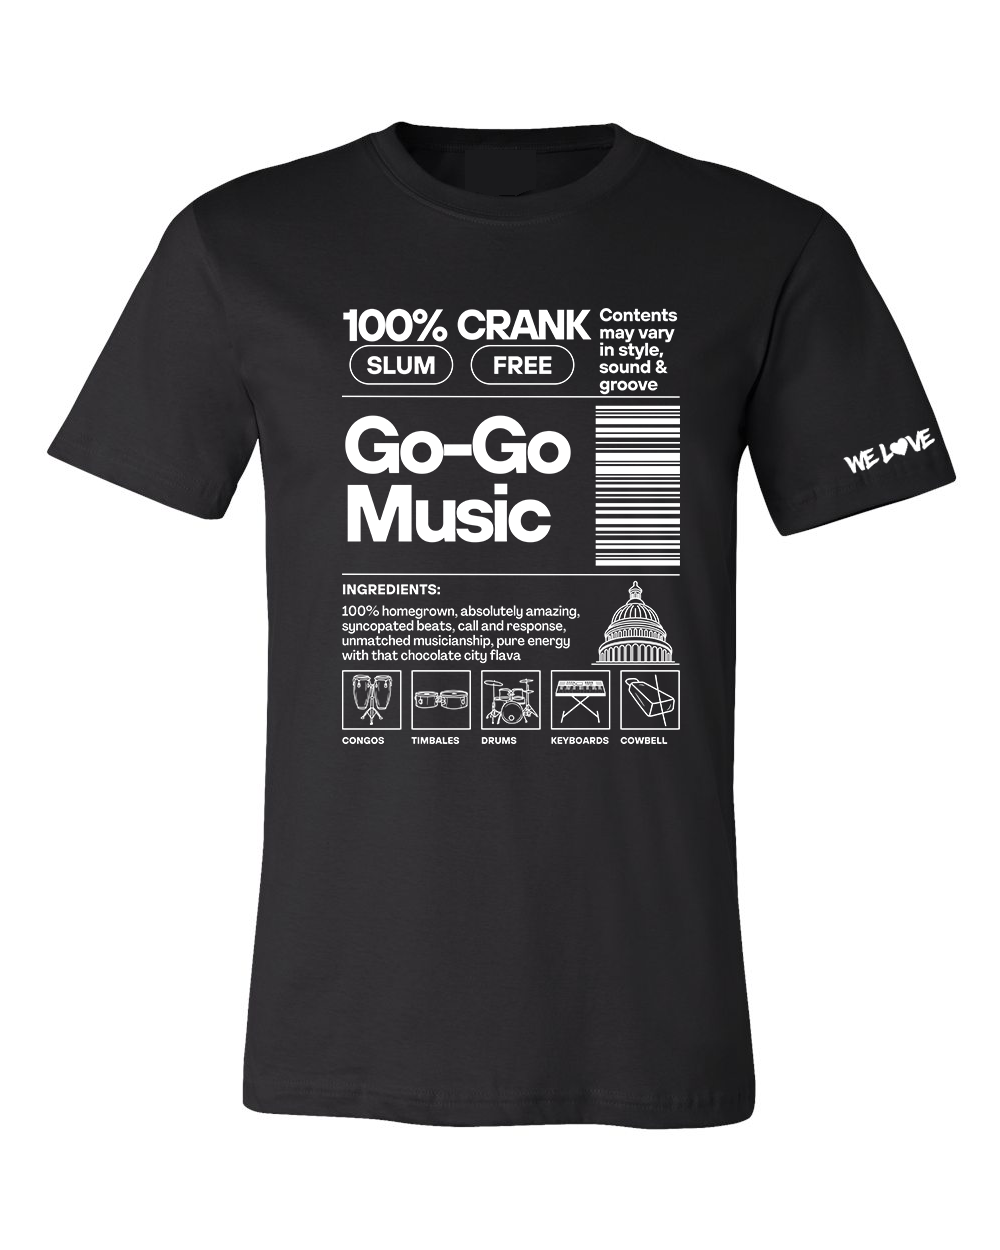 Go-Go Music Ingredients - Tshirt